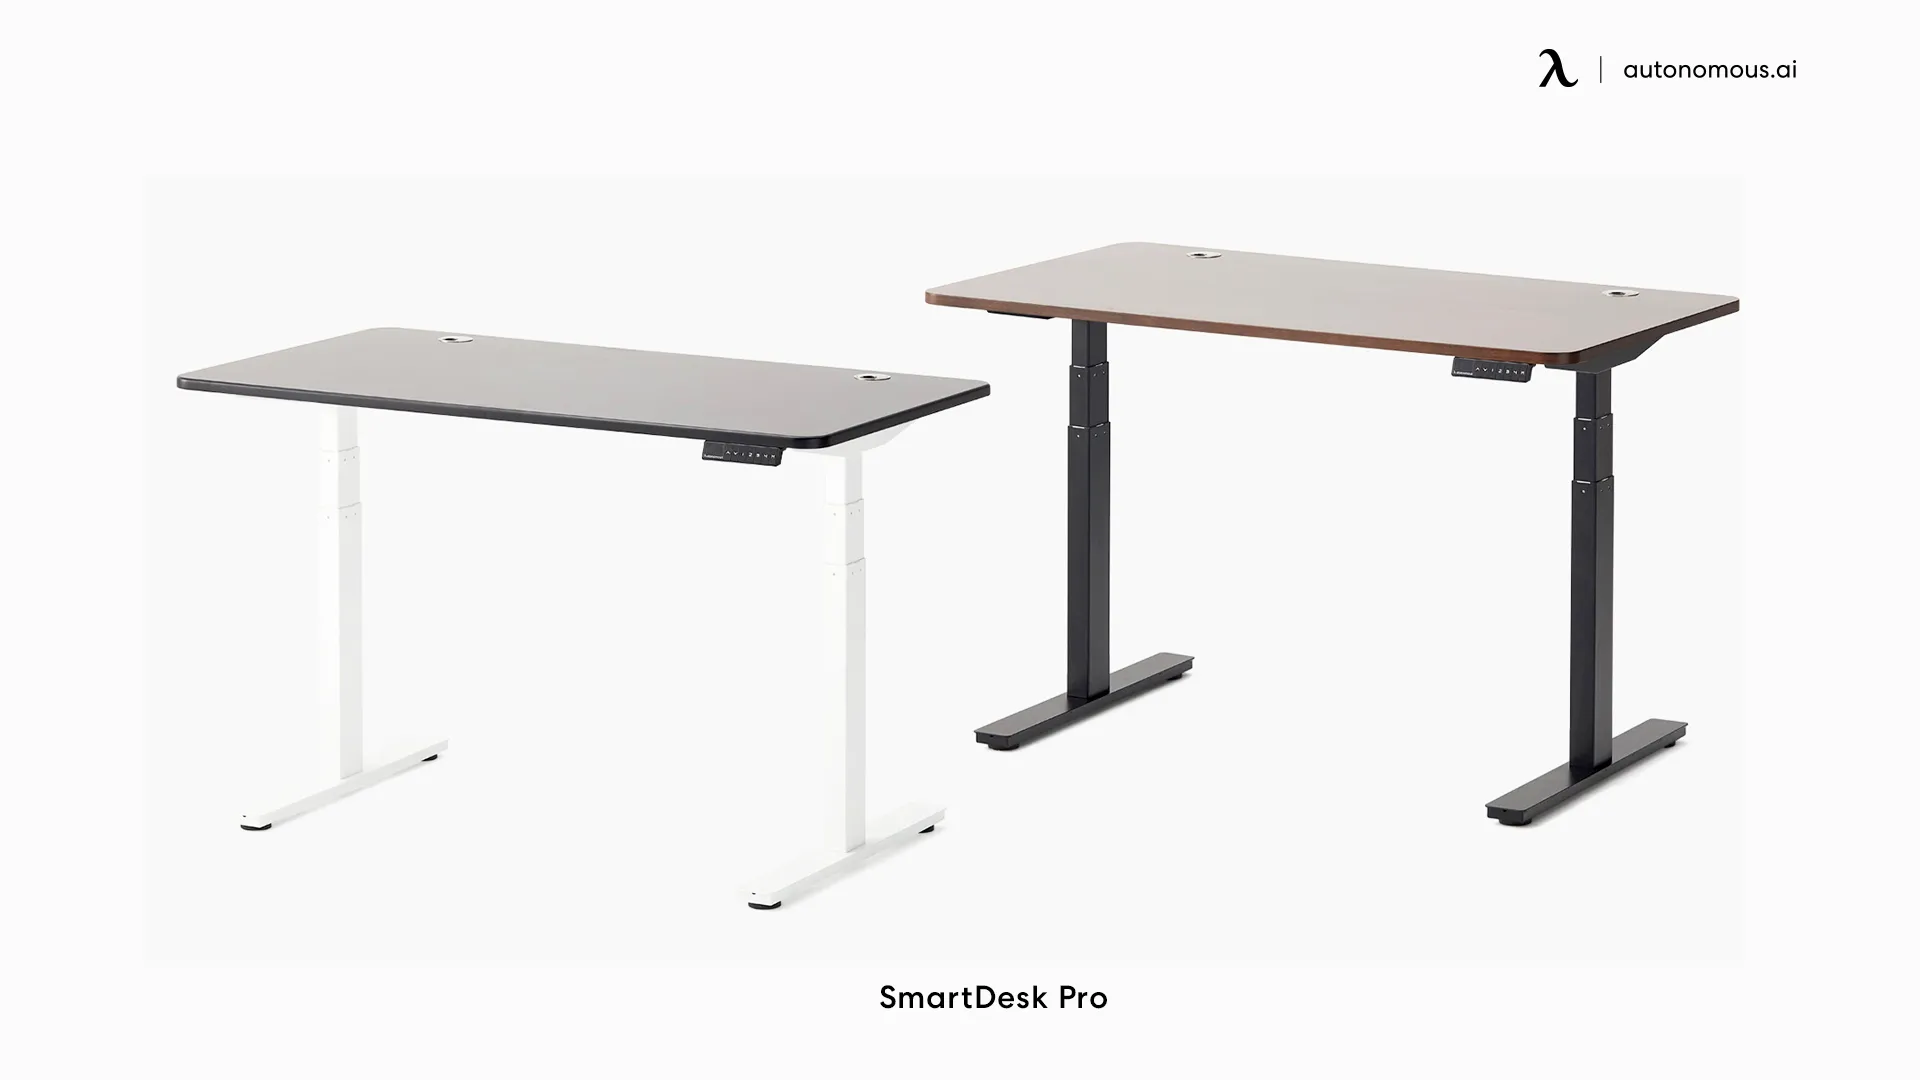 SmartDesk Pro adjustable computer desk